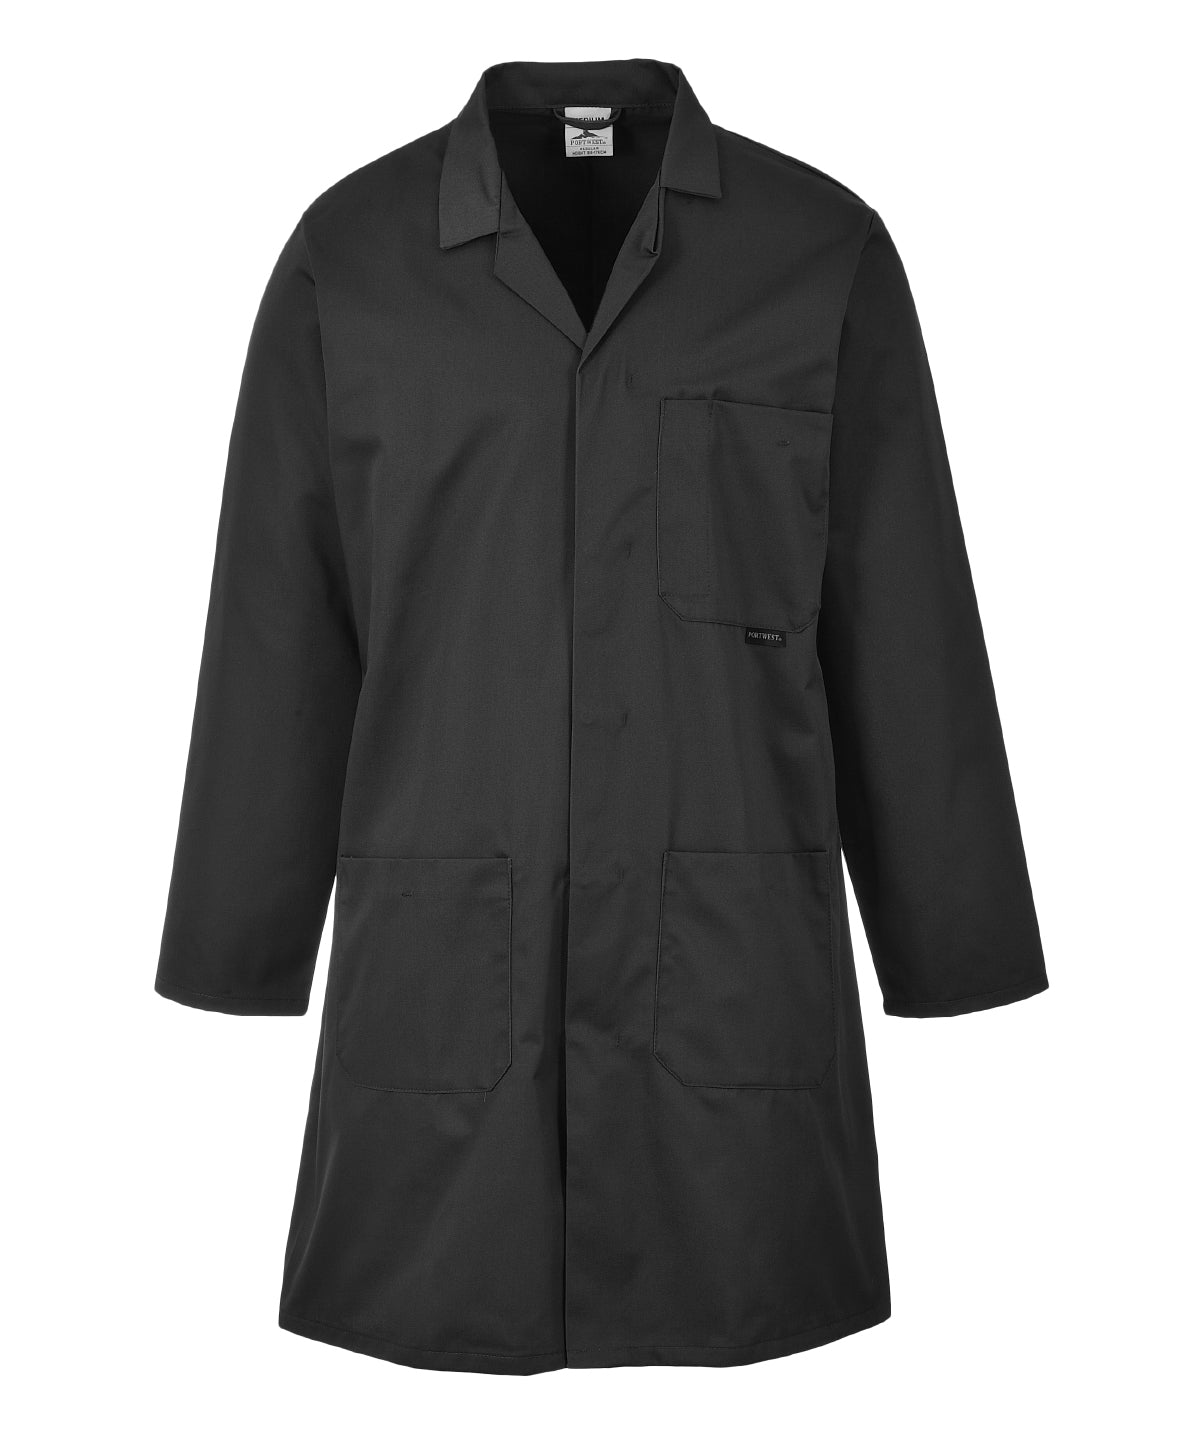 Personalised Jackets - Navy Portwest Lab coat (2852)